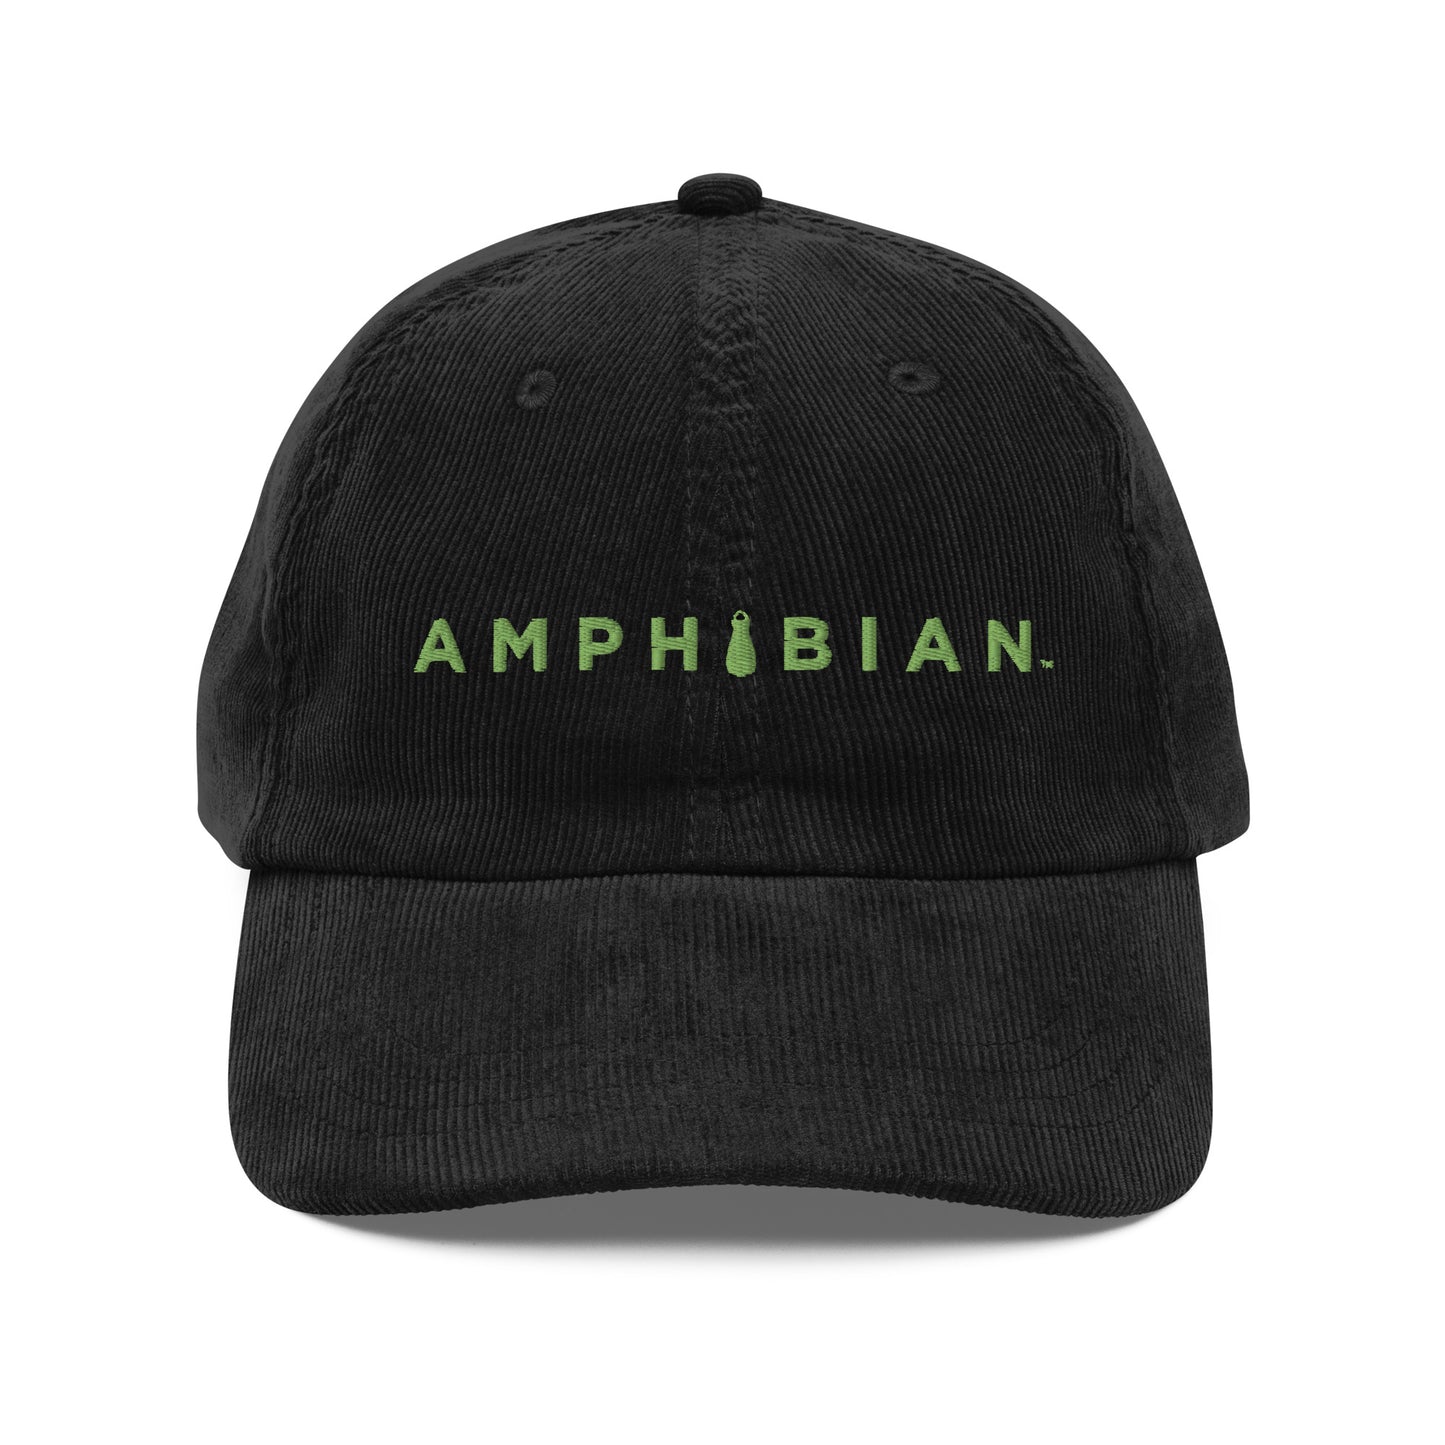 AMPHIBIAN™ by DEEPSEA™ Vintage corduroy cap